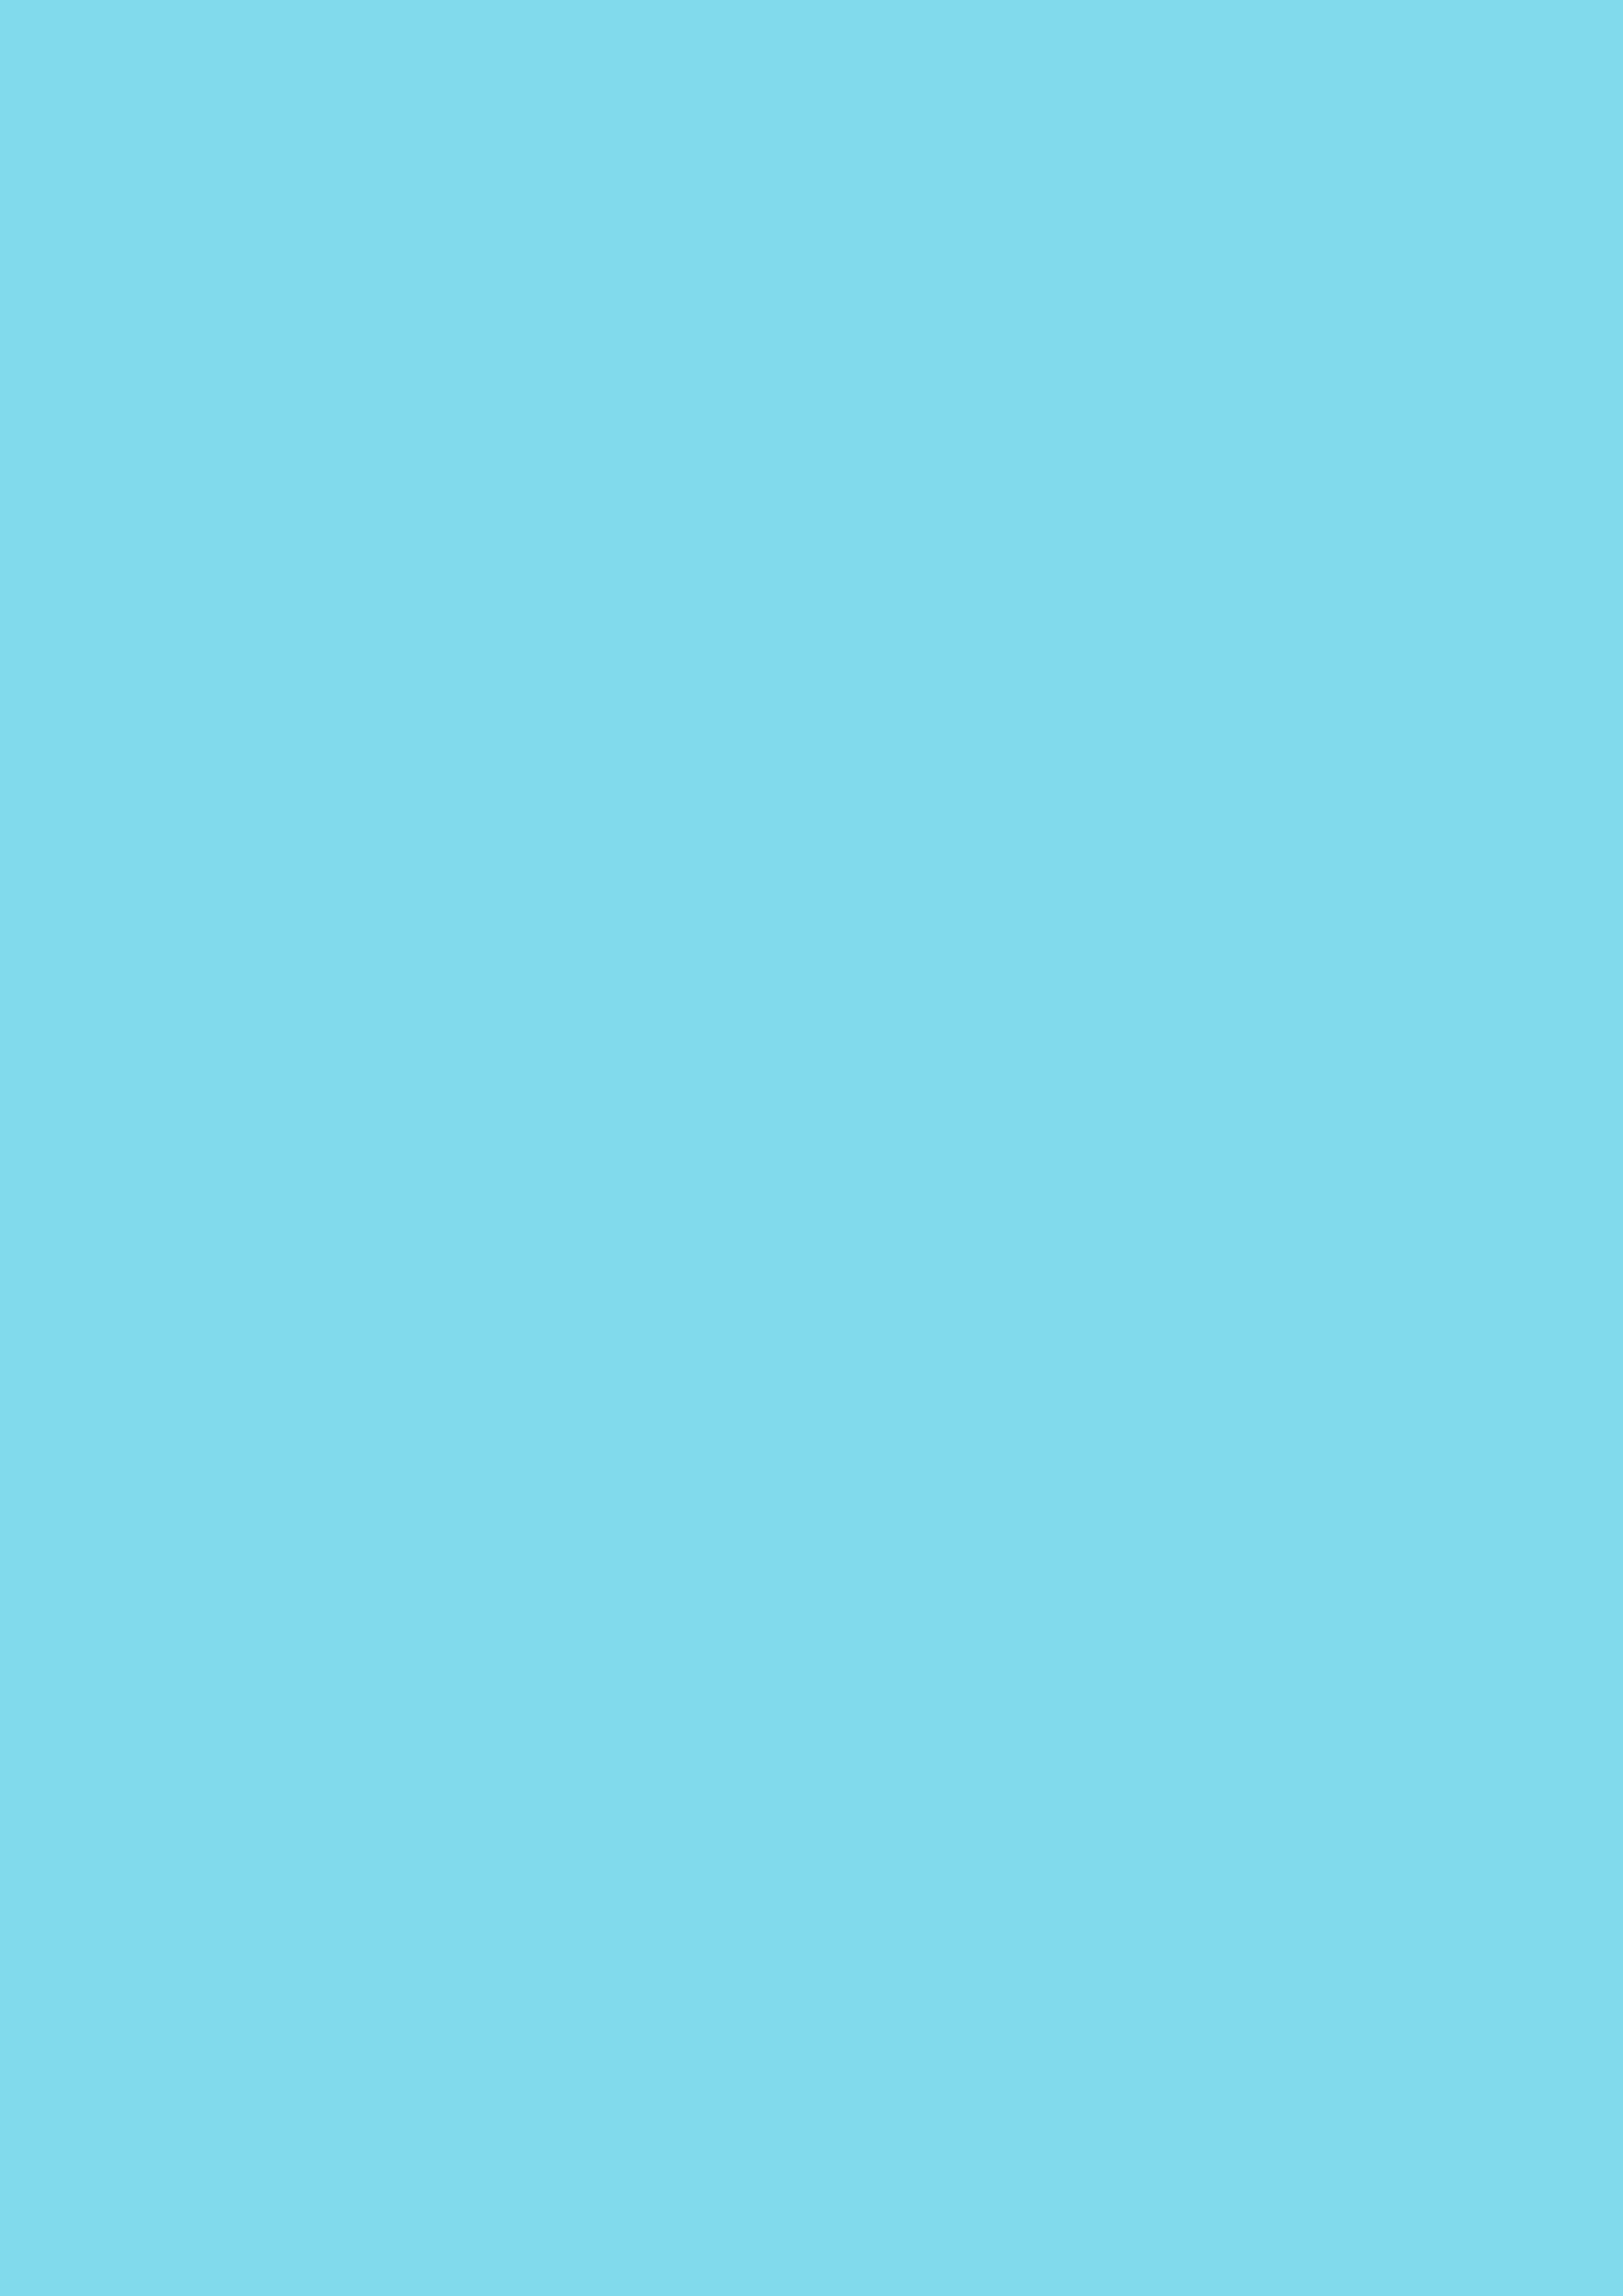 2480x3508 Medium Sky Blue Solid Color Background